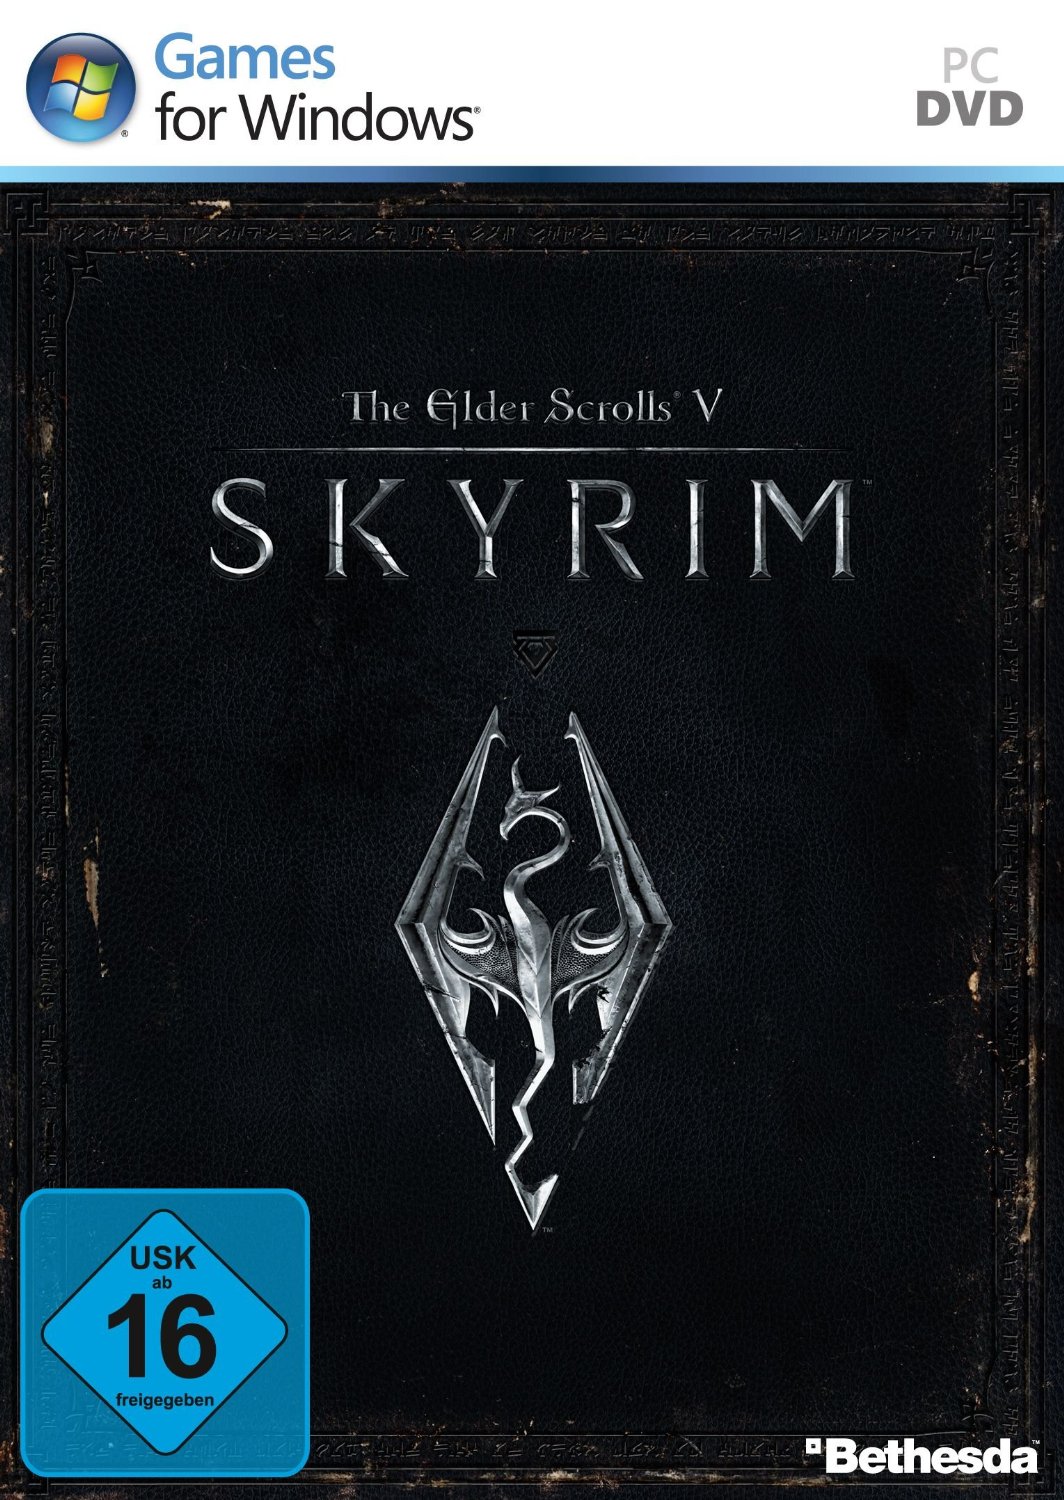 The Elder Scrolls V: Skyrim PC, Standard-Edition